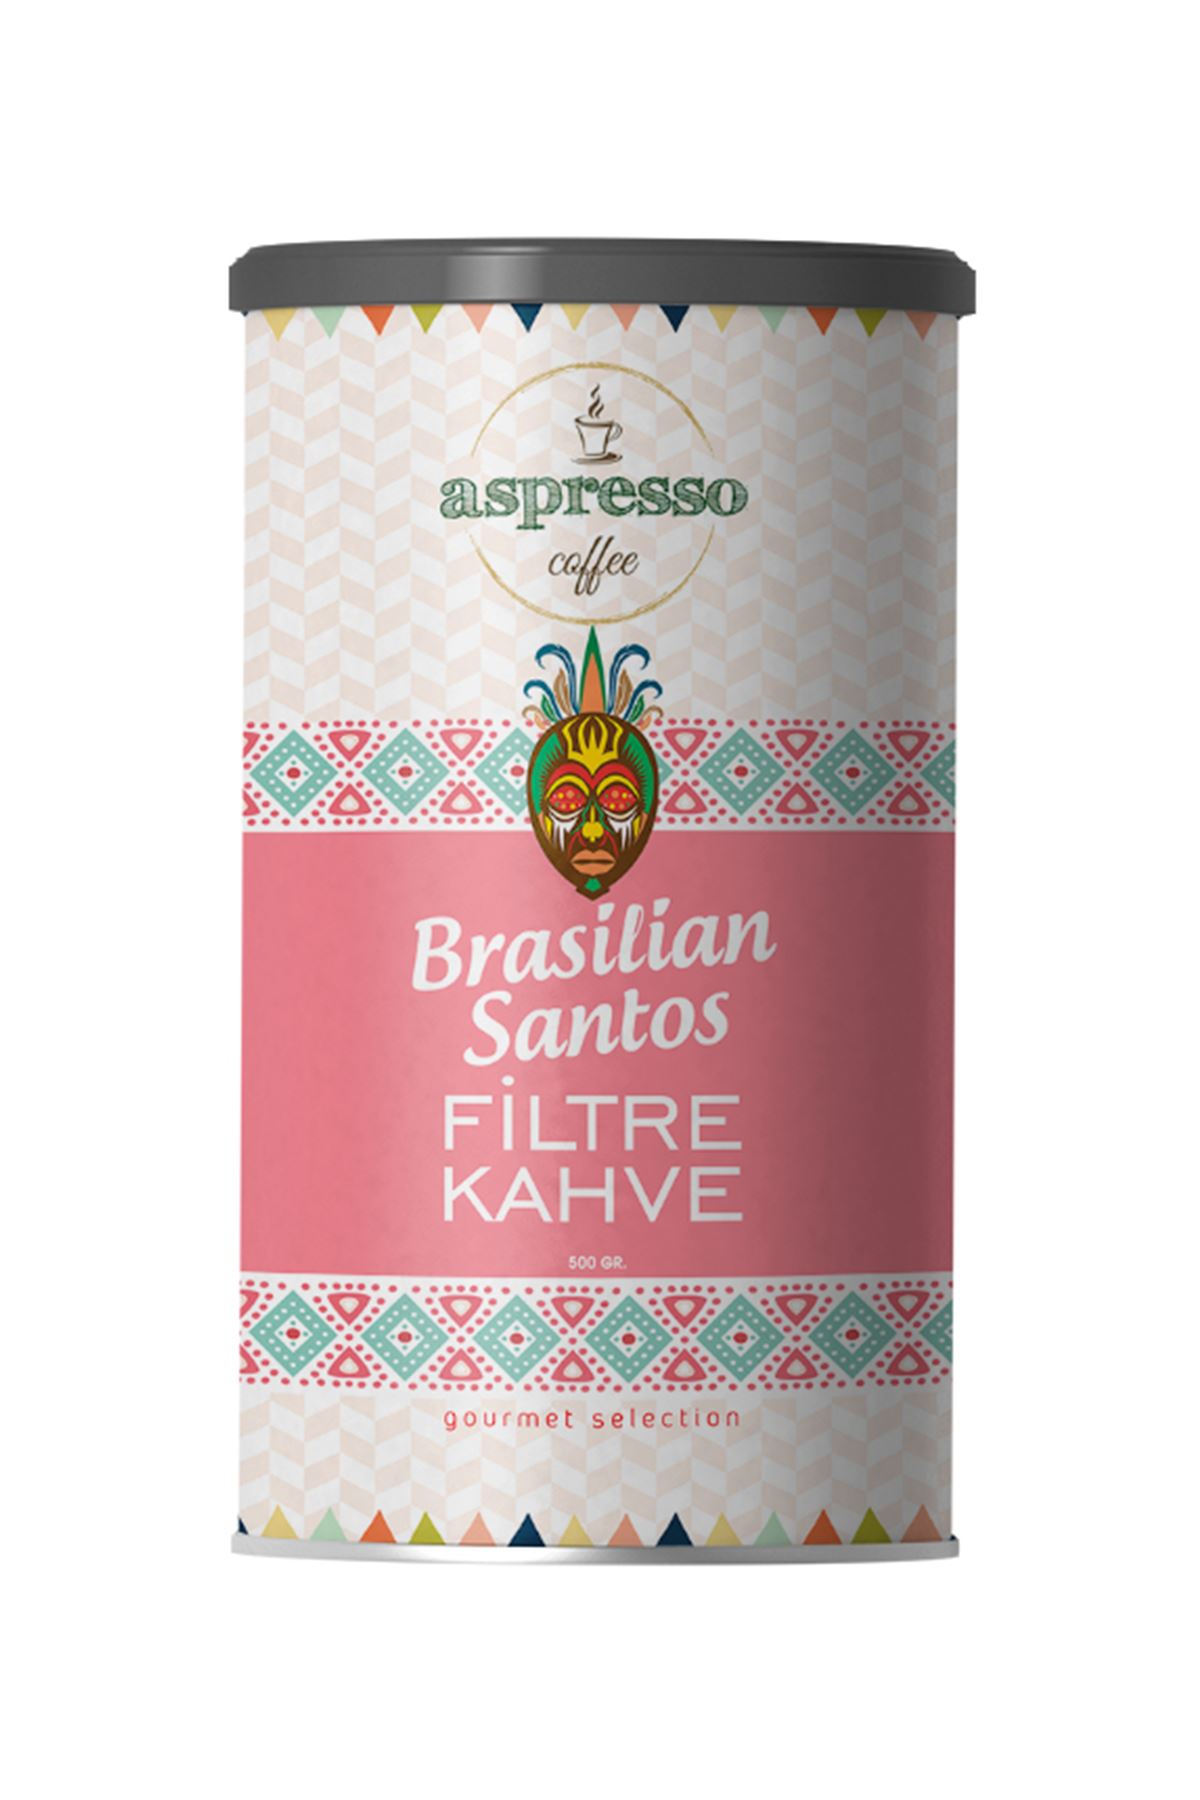 Brasilian Santos Filtre Kahve 500 gr.